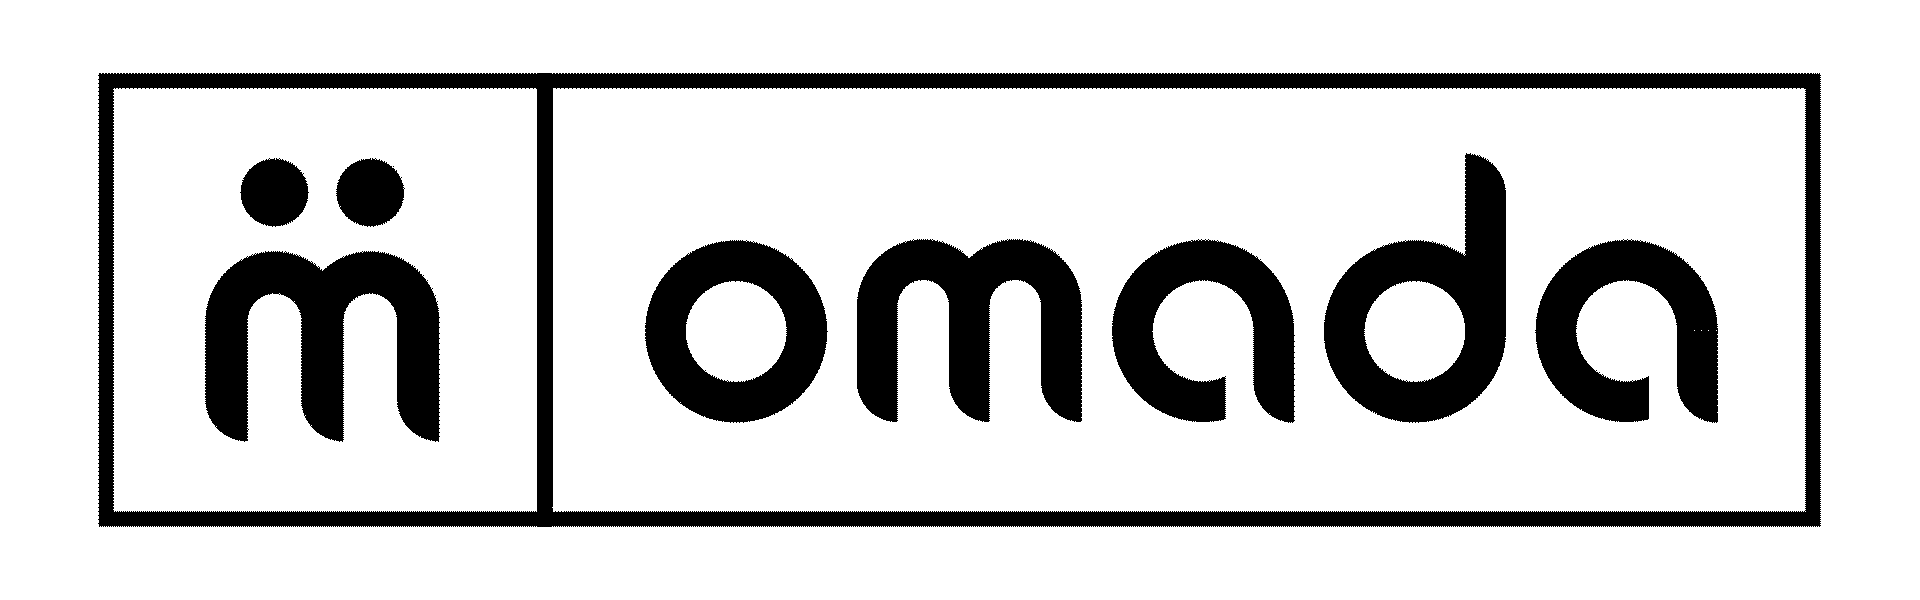 Logo pour marque de sport